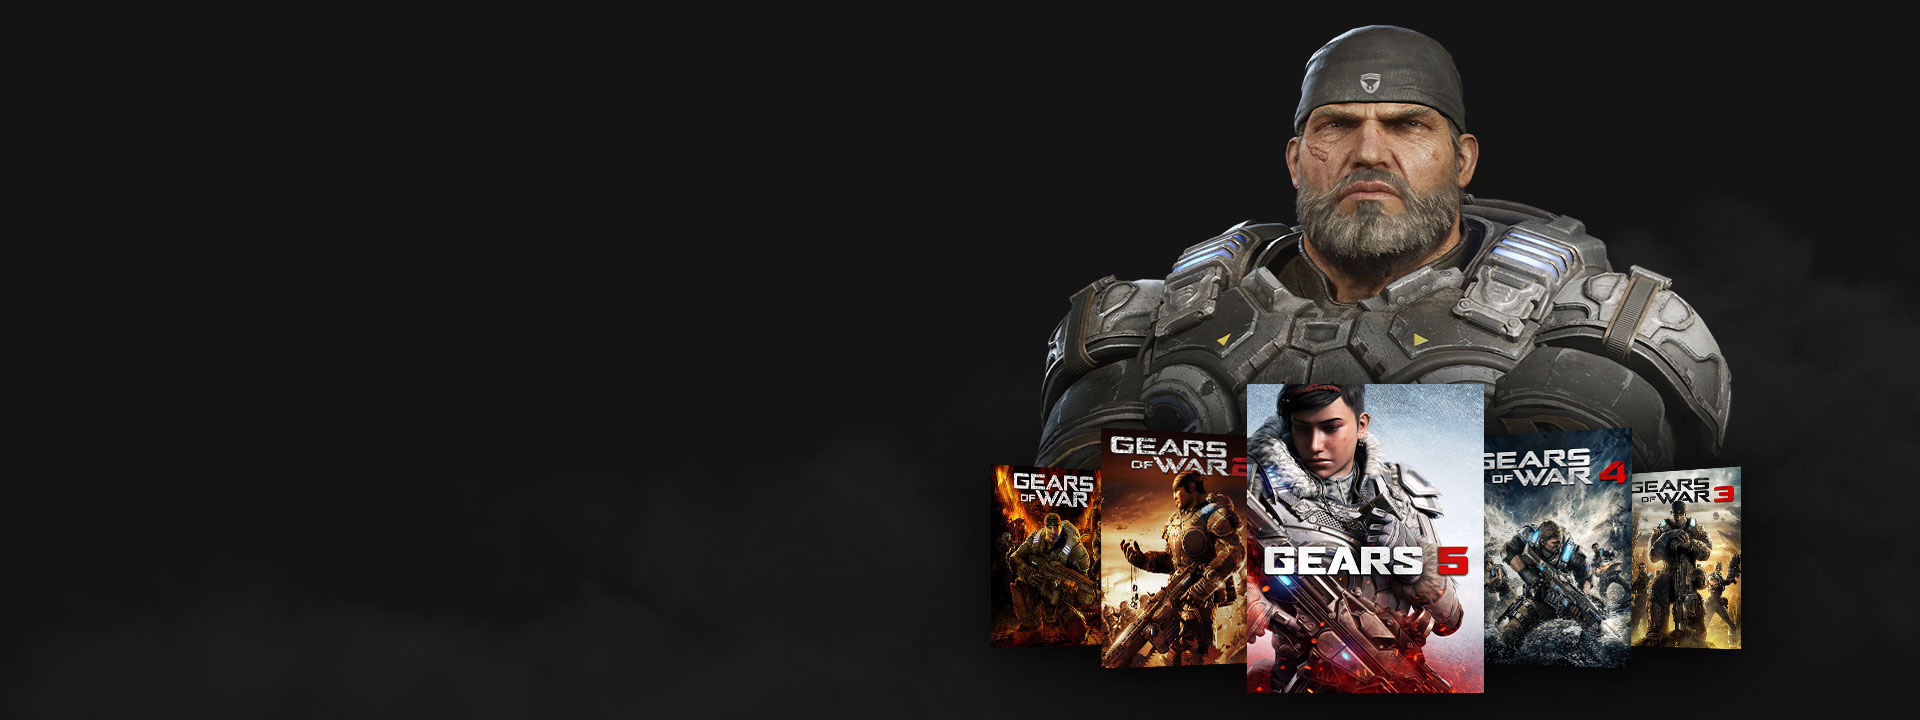 Logotipo do Xbox Game Pass, Marcus posa com os jogos Gears of War.